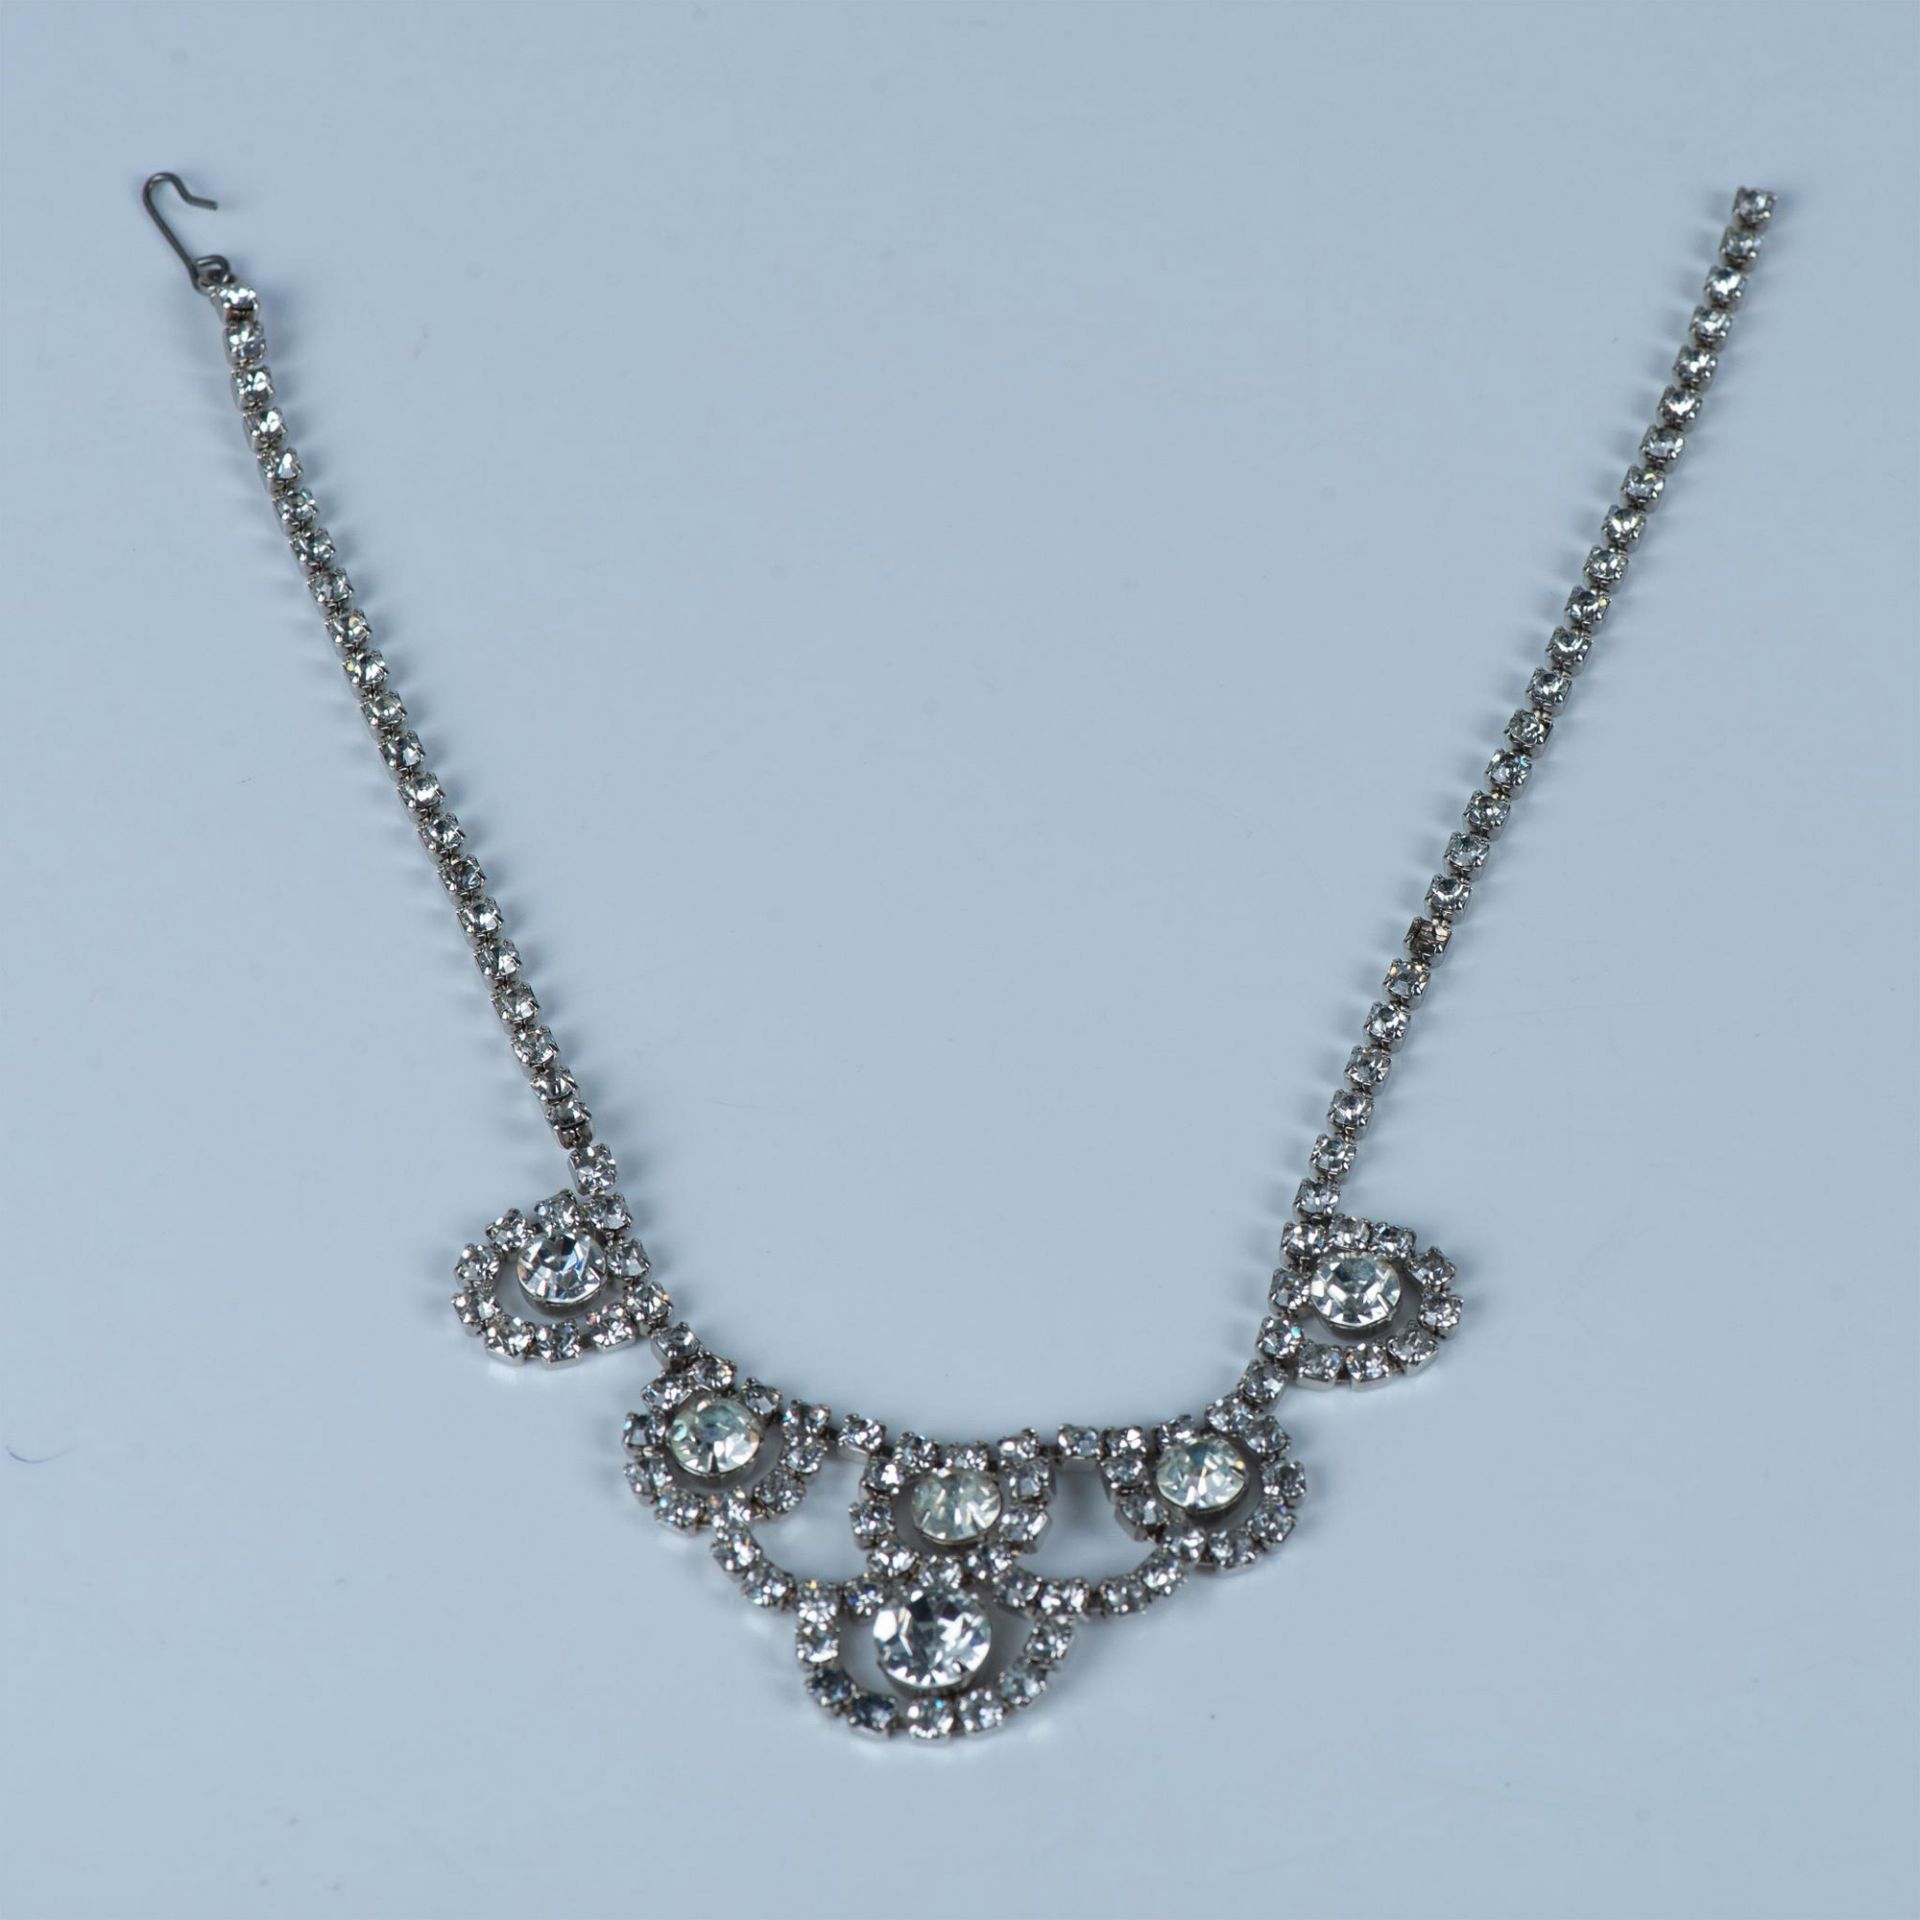 Stunning Silver Metal & Rhinestone Necklace - Image 4 of 7